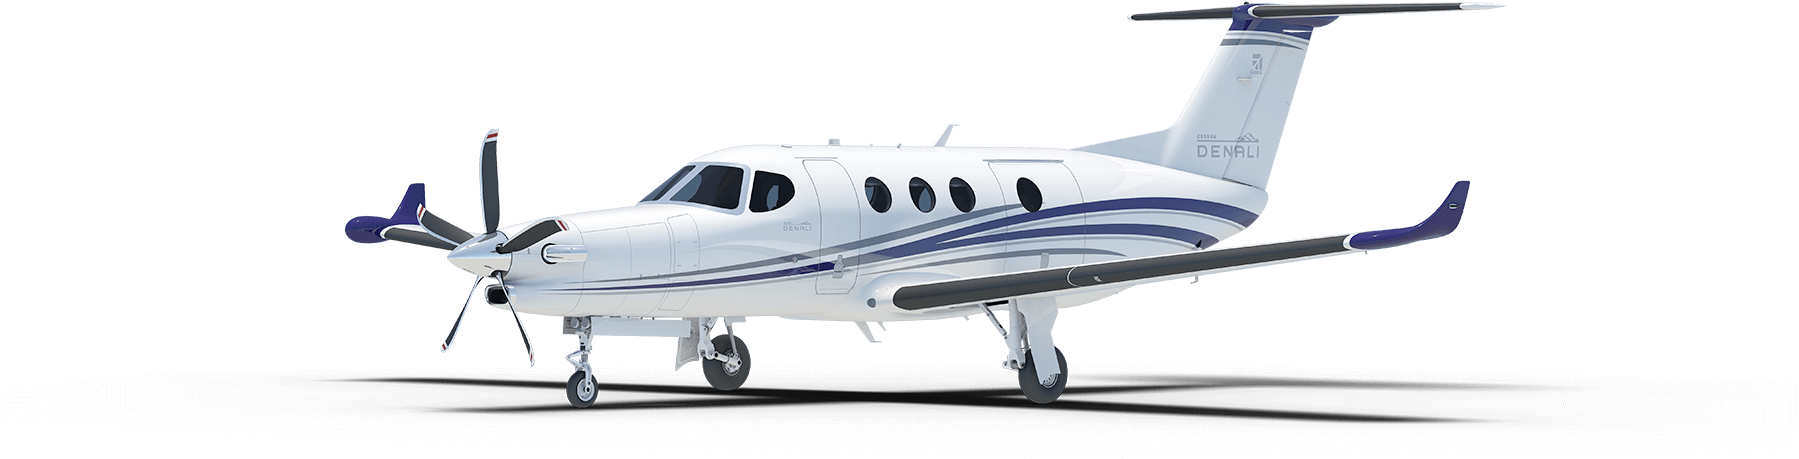 1800 X 544 9 - Cessna Denali (1800x544)